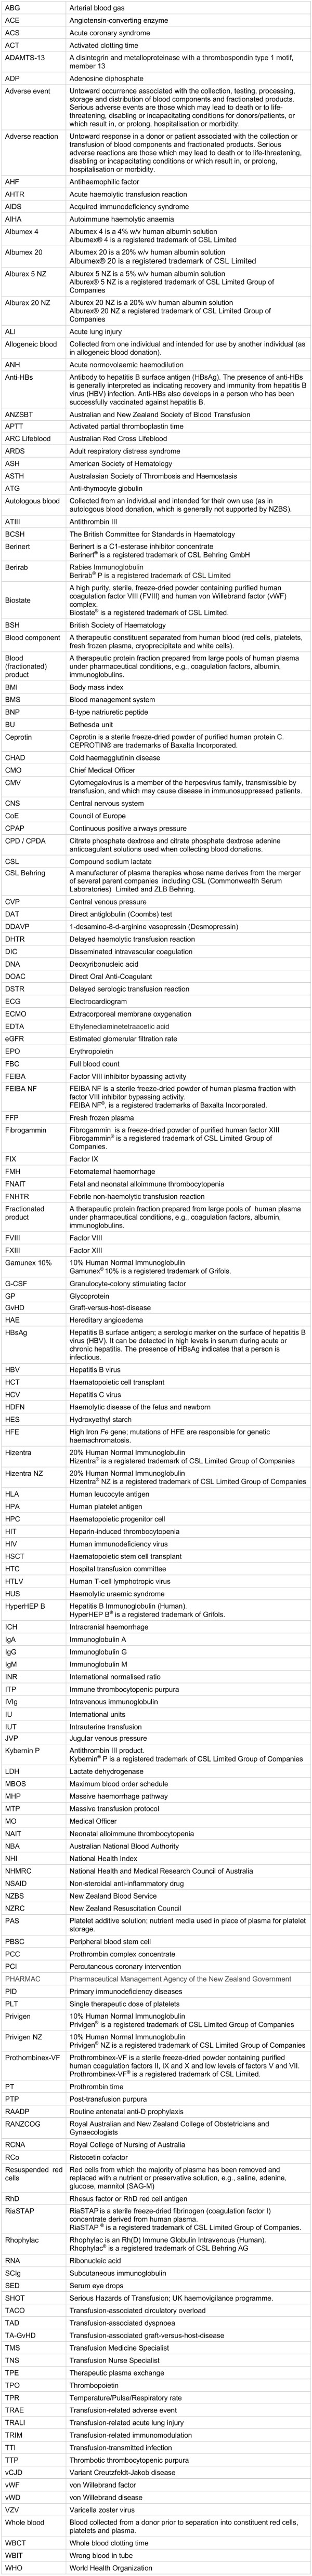 Transfusion Medicine Handbook_Abbreviations and Glossary 111G01502